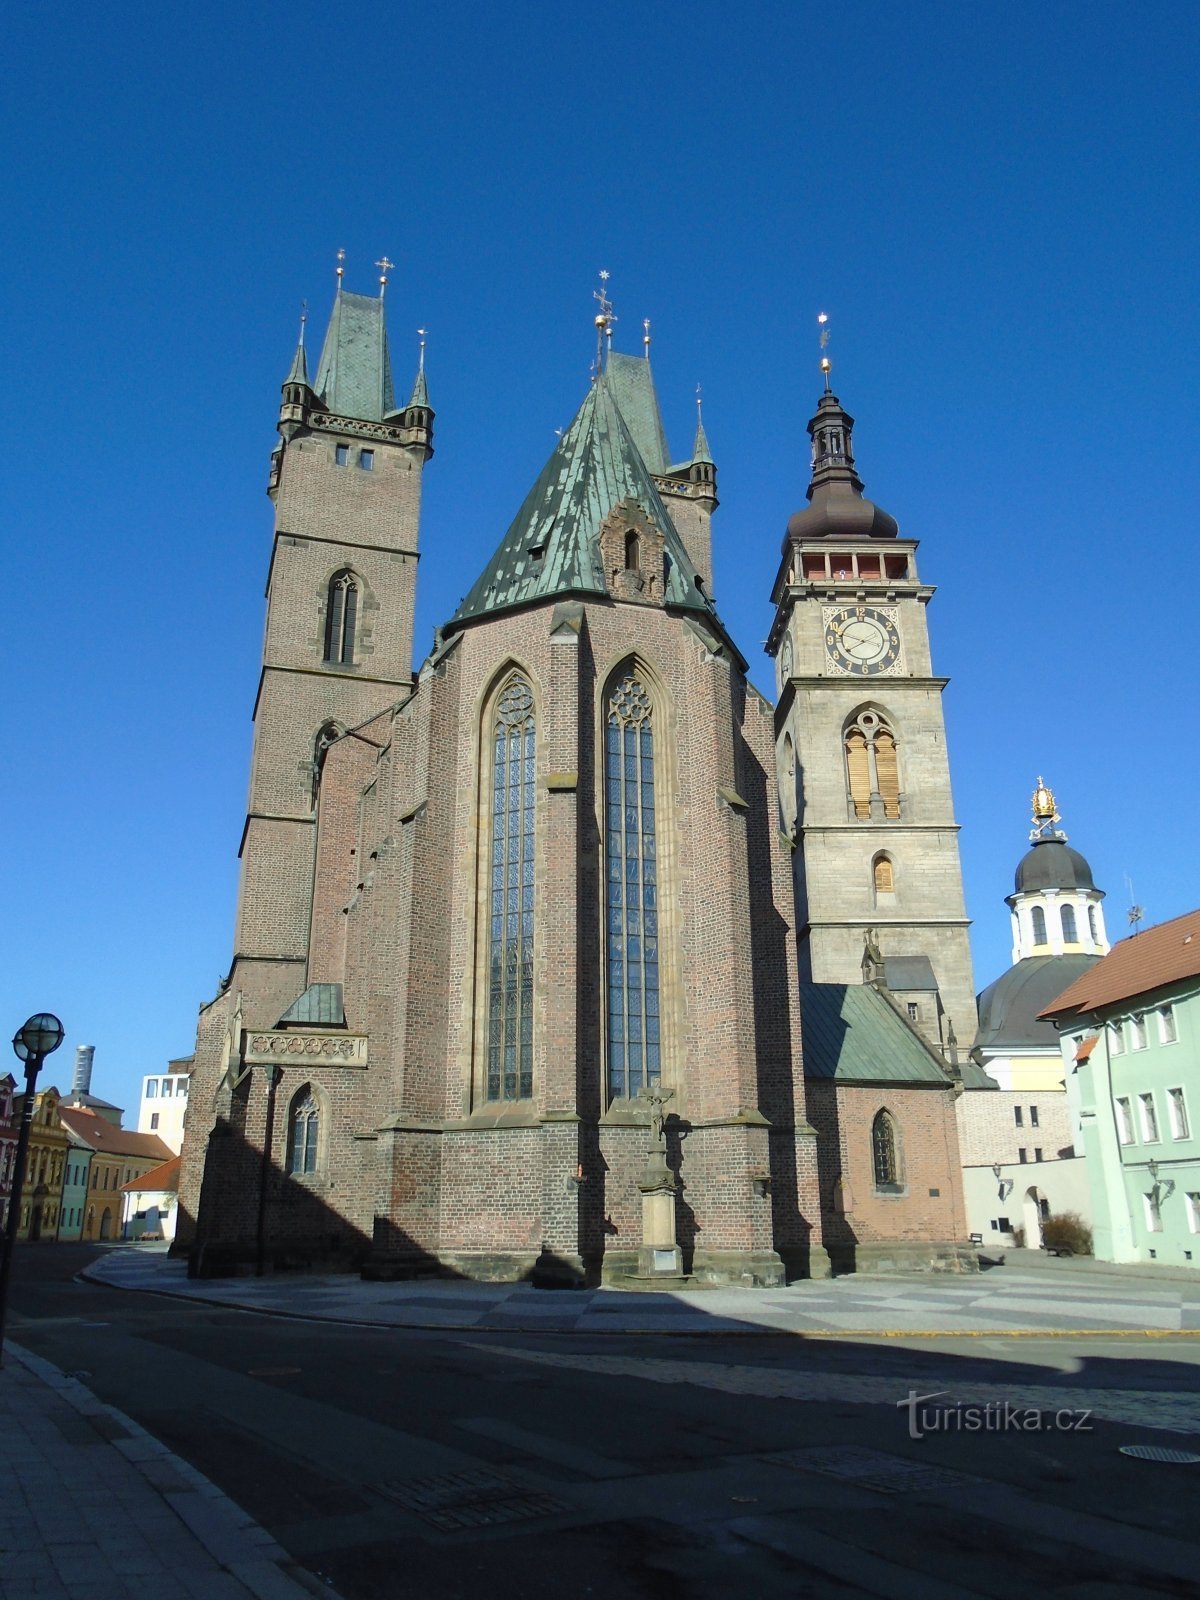 Pyhän katedraali Aave Valkoisella tornilla (Hradec Králové)